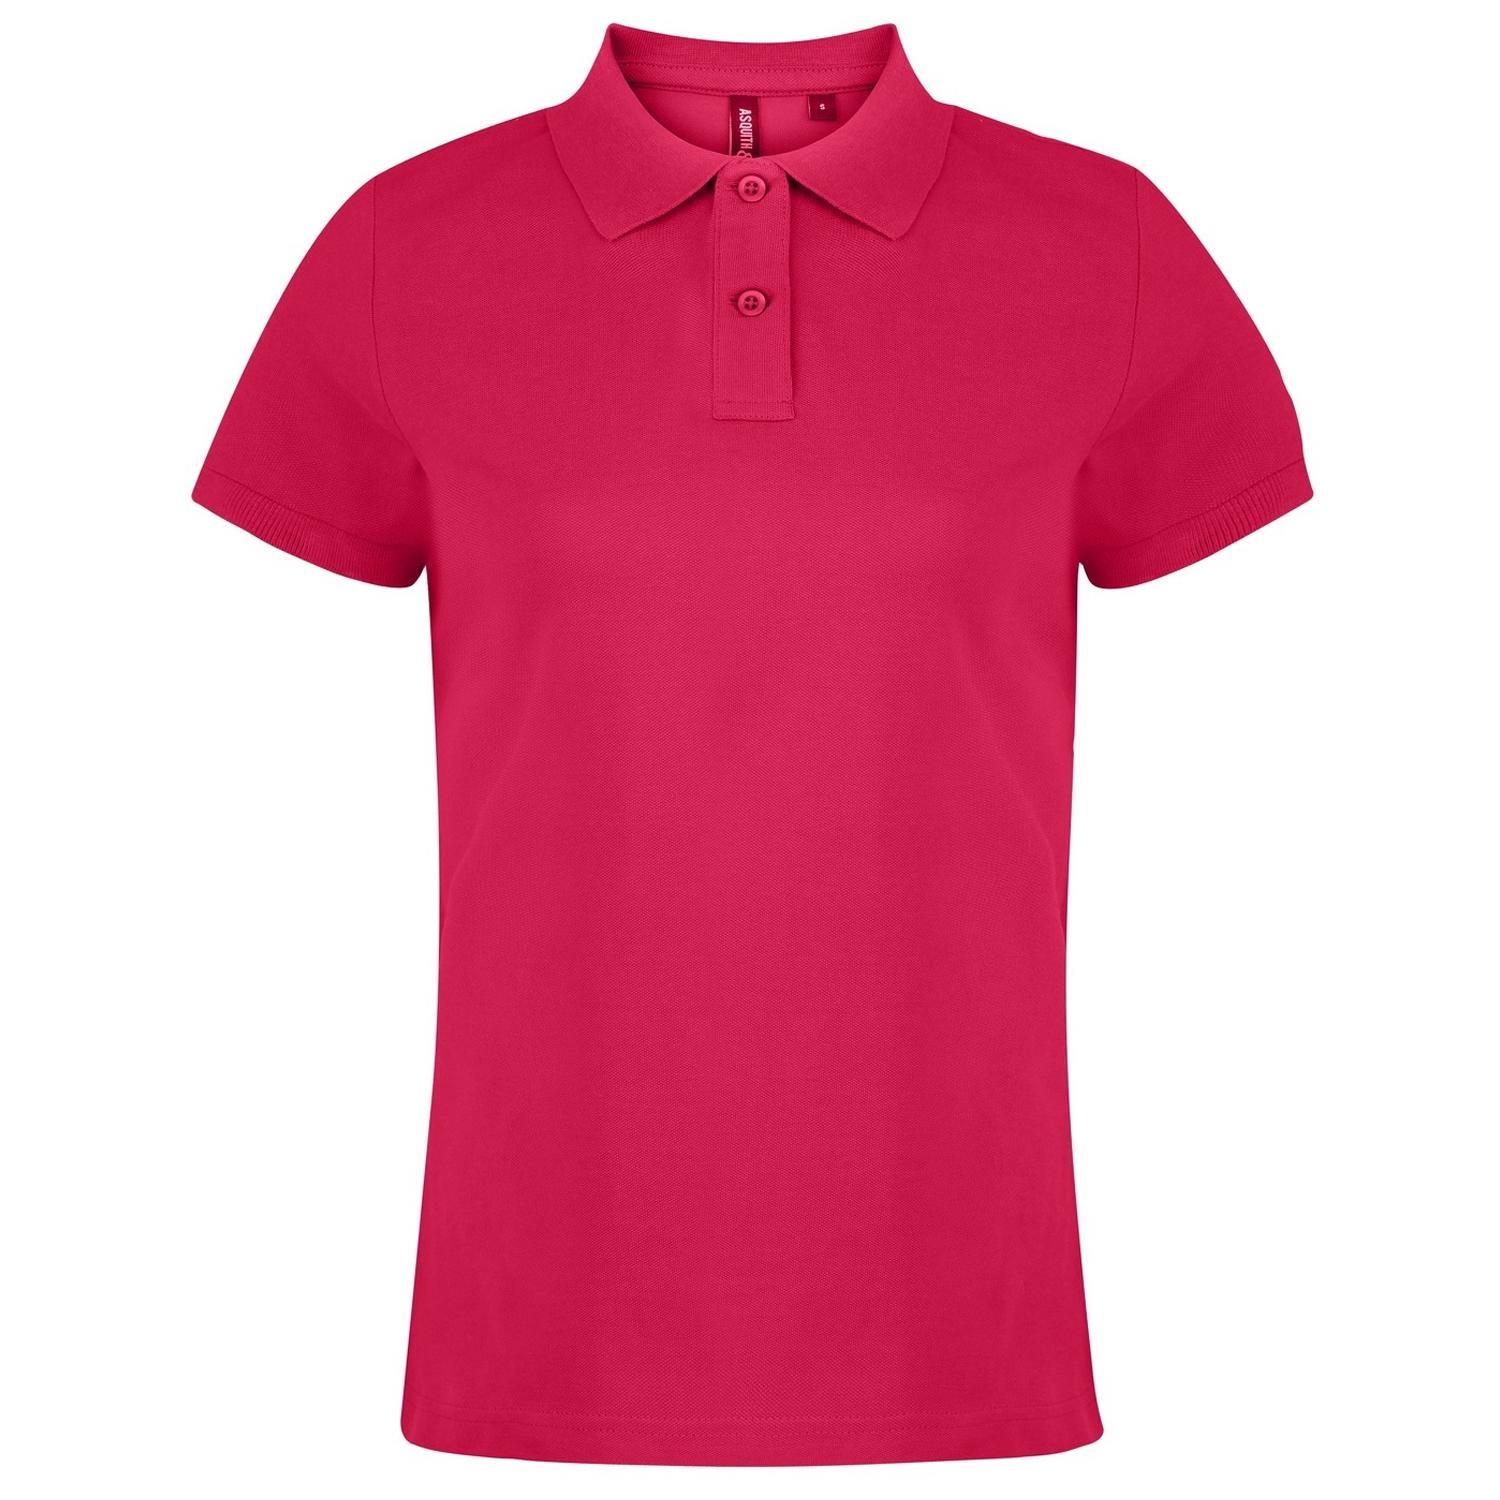 Asquith & Fox Womens/Ladies Plain Short Sleeve Polo Shirt (Hot Pink) (S)